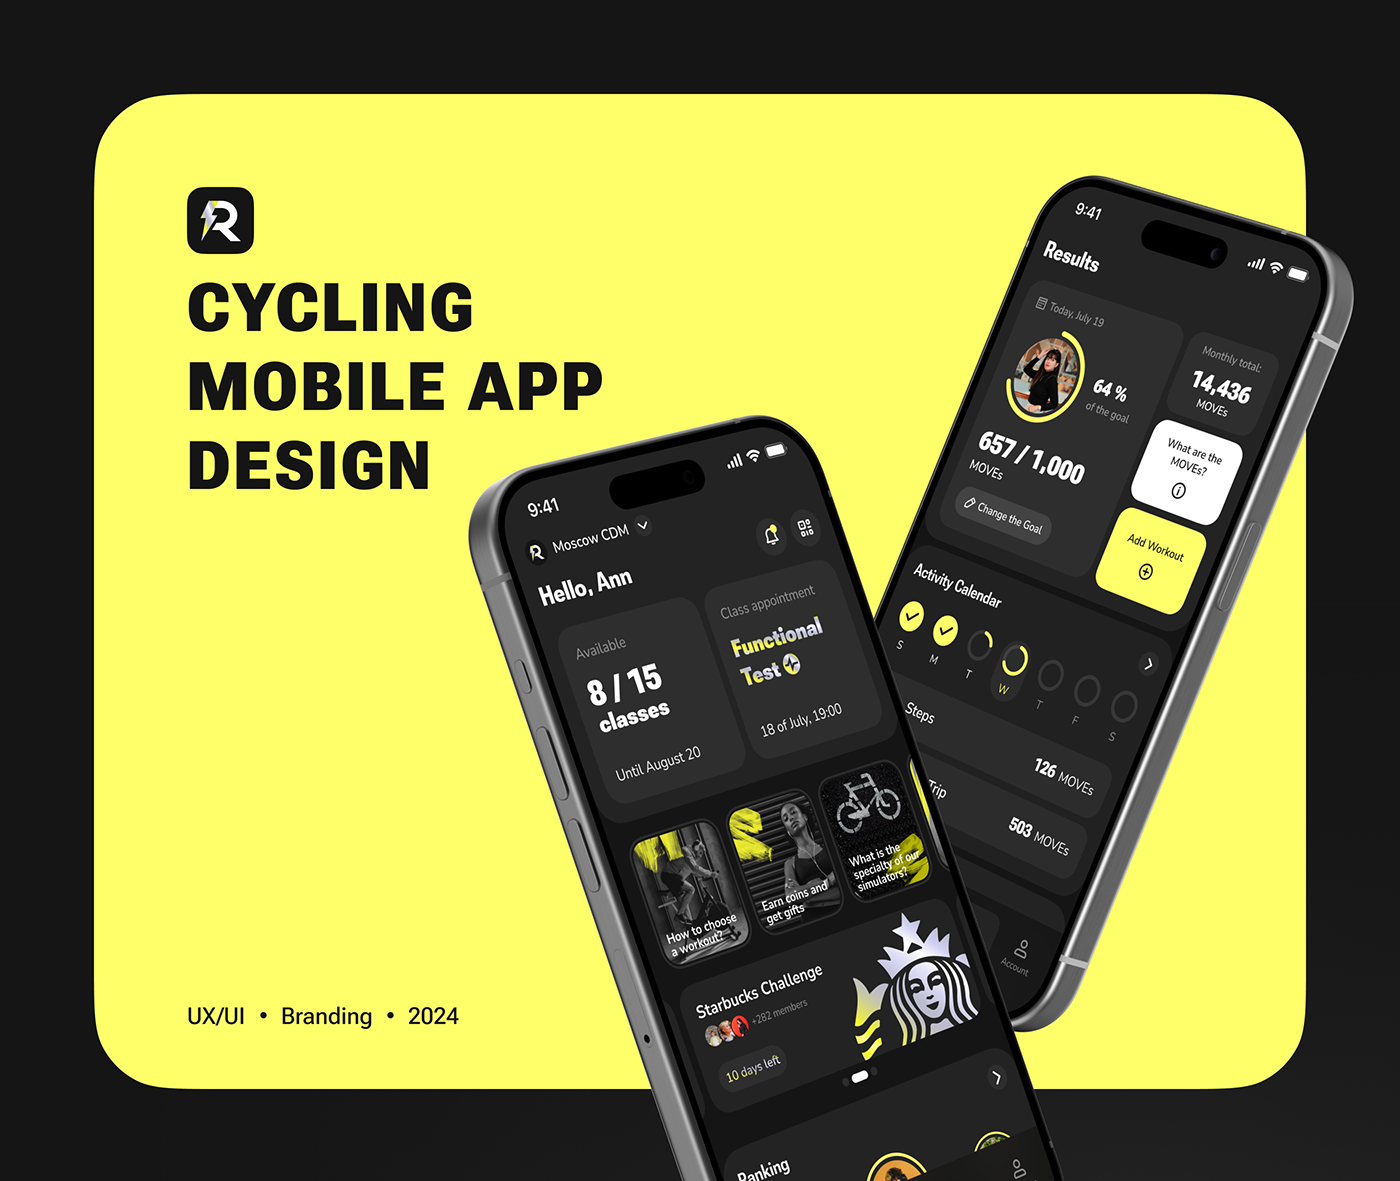 UI/UX ui design Mobile app user interface app design fitness app gym training workout Cycling